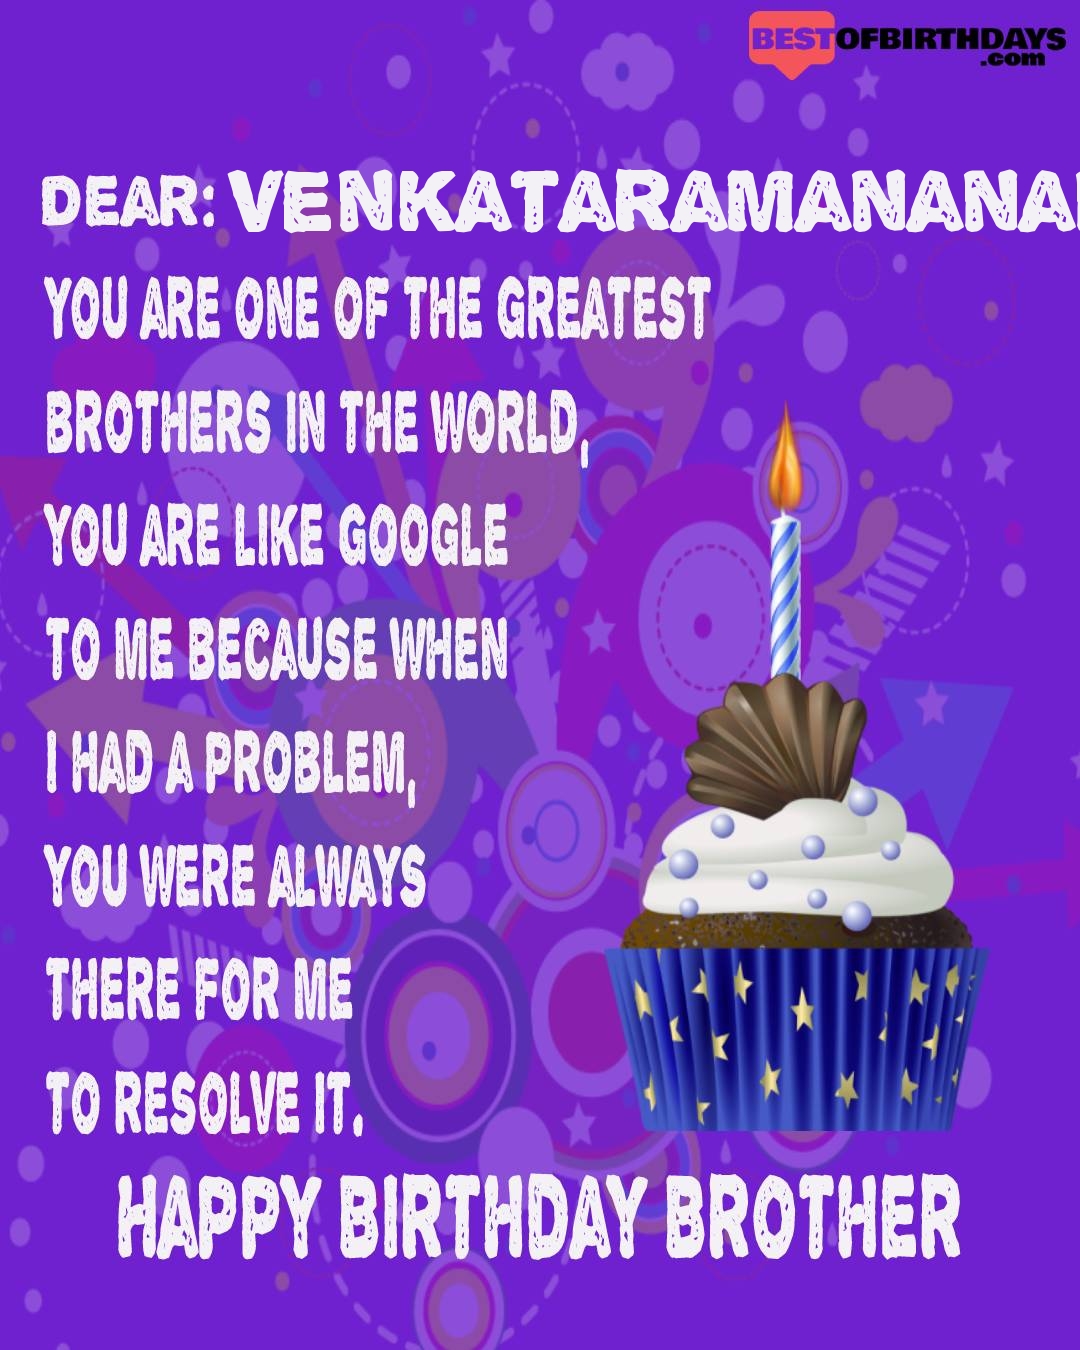 Happy birthday venkataramananandan bhai brother bro